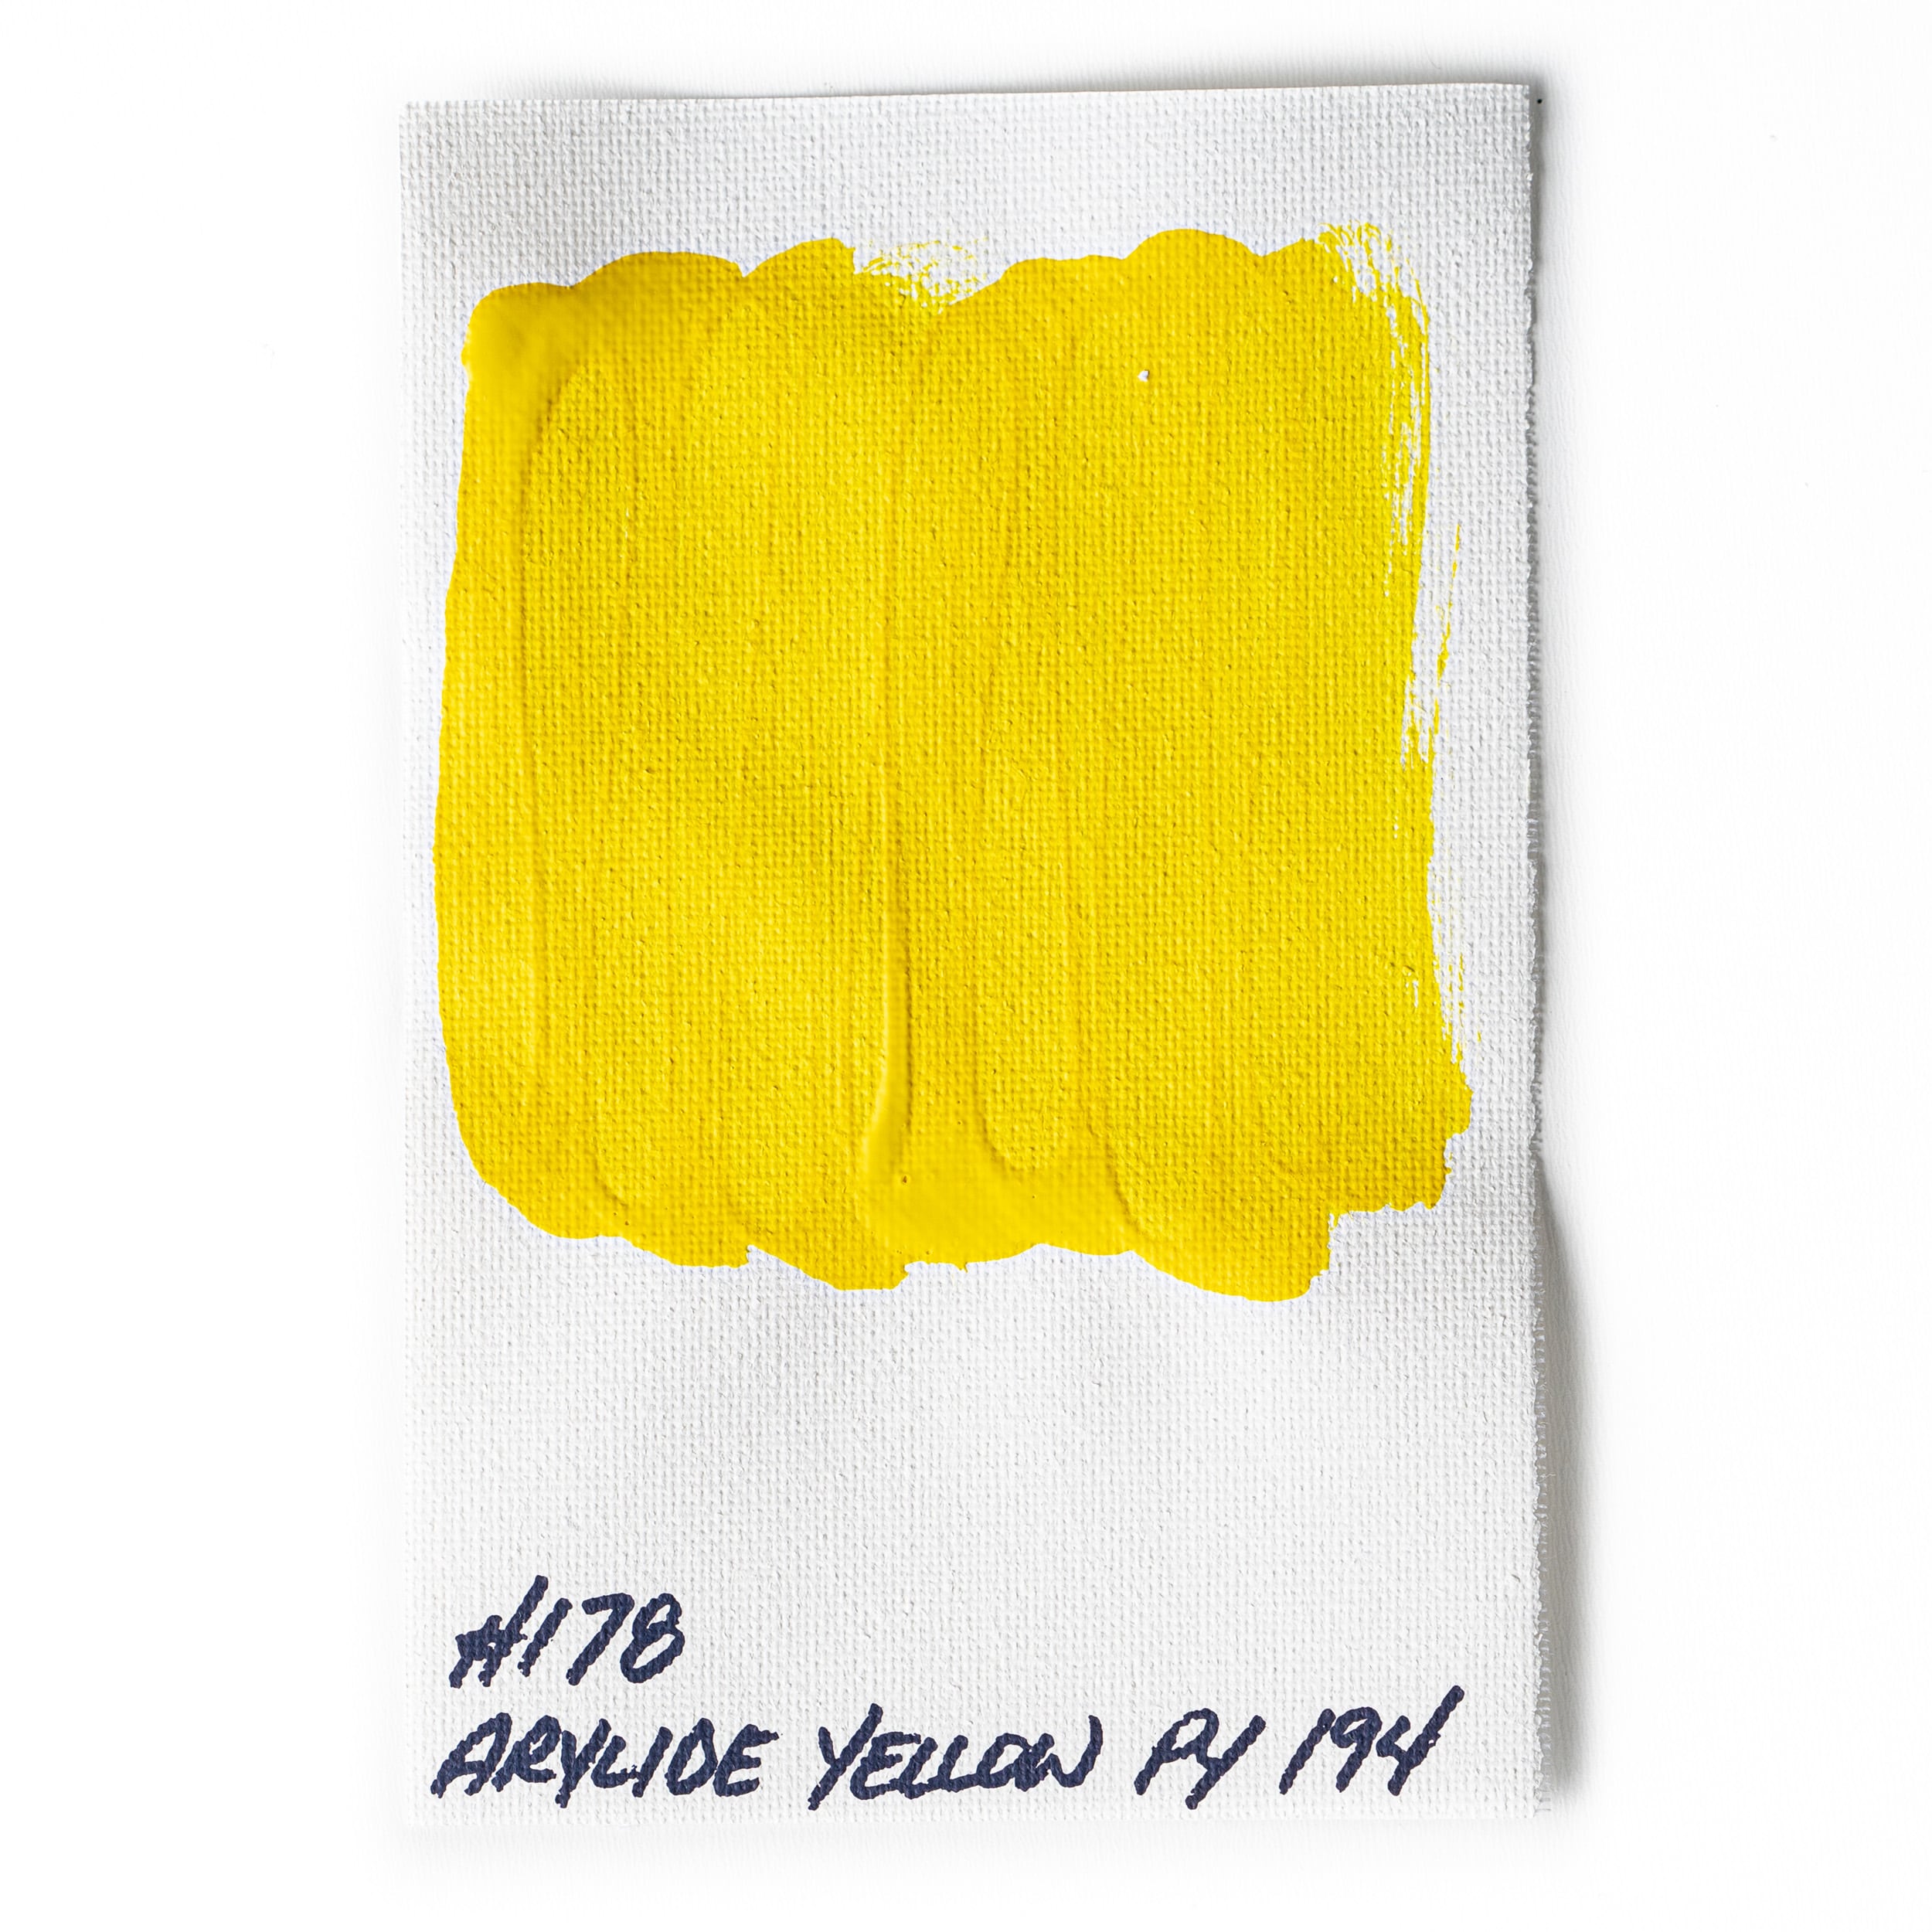 Buy #178 Arylide Yellow (PY 194) - Lightfastness:, - Transparent Online